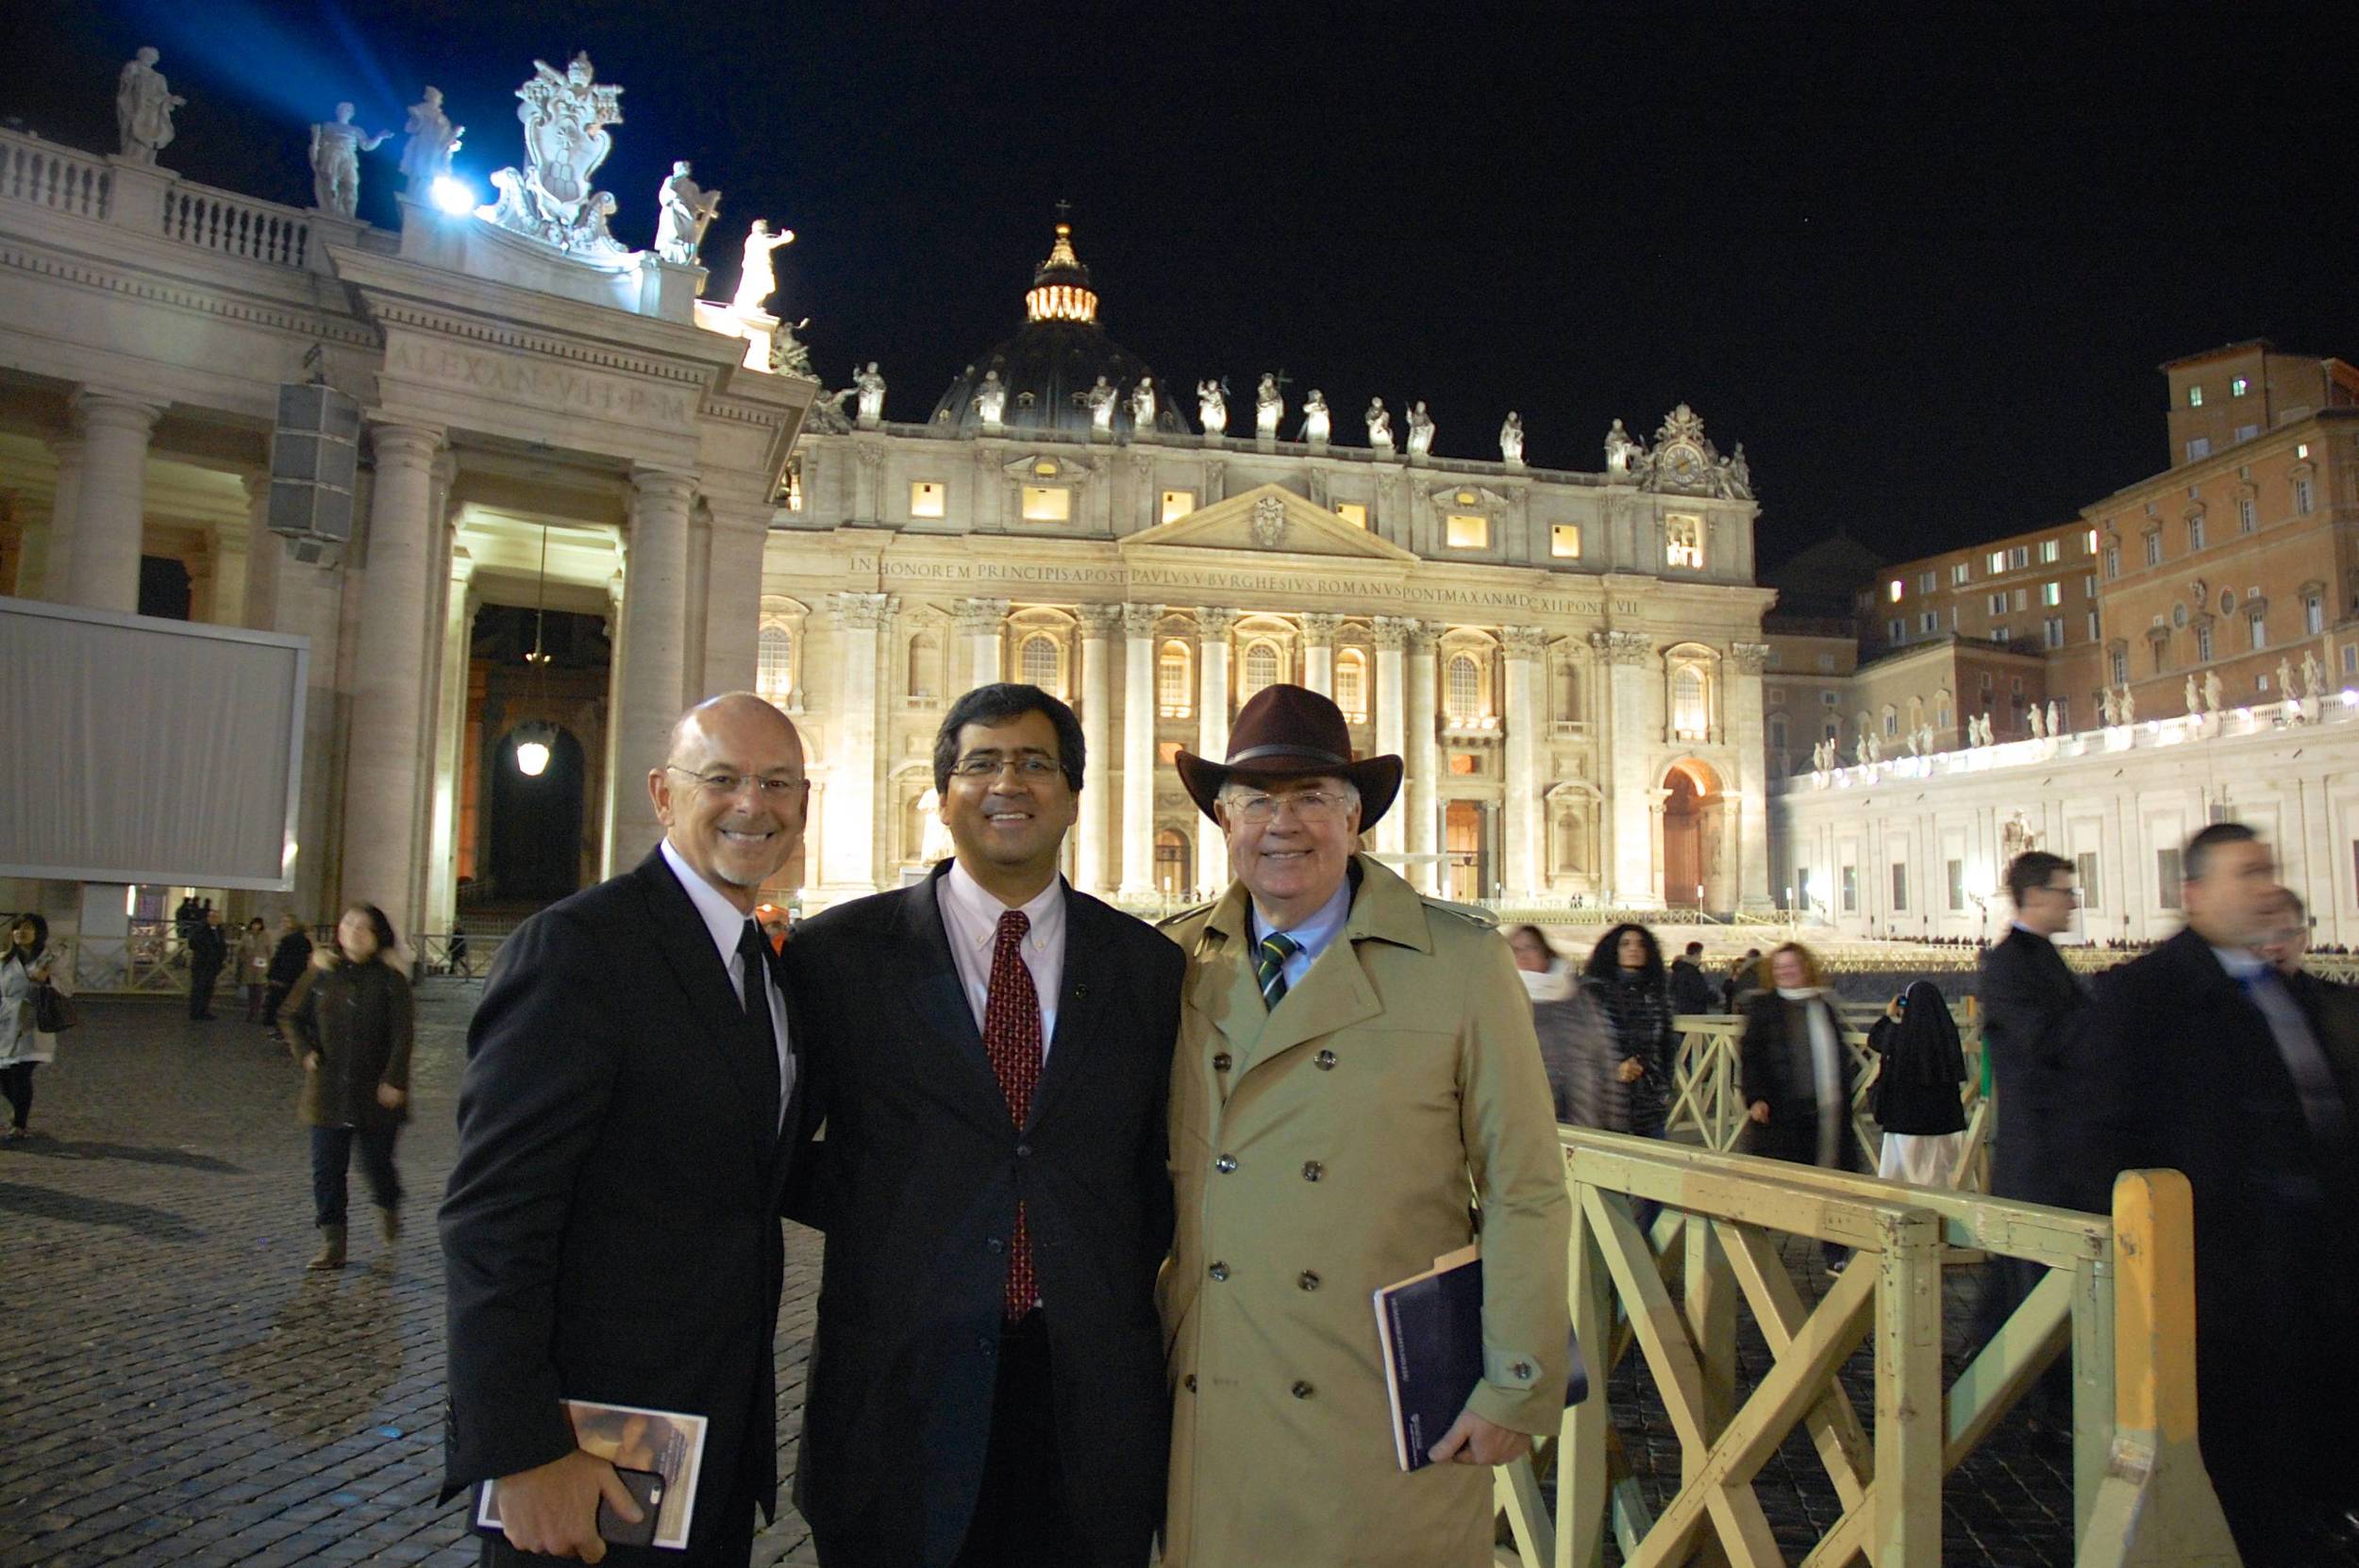  Byron Johnson, Tim Shah, and Ken Starr at St. Peter's Basilica. 